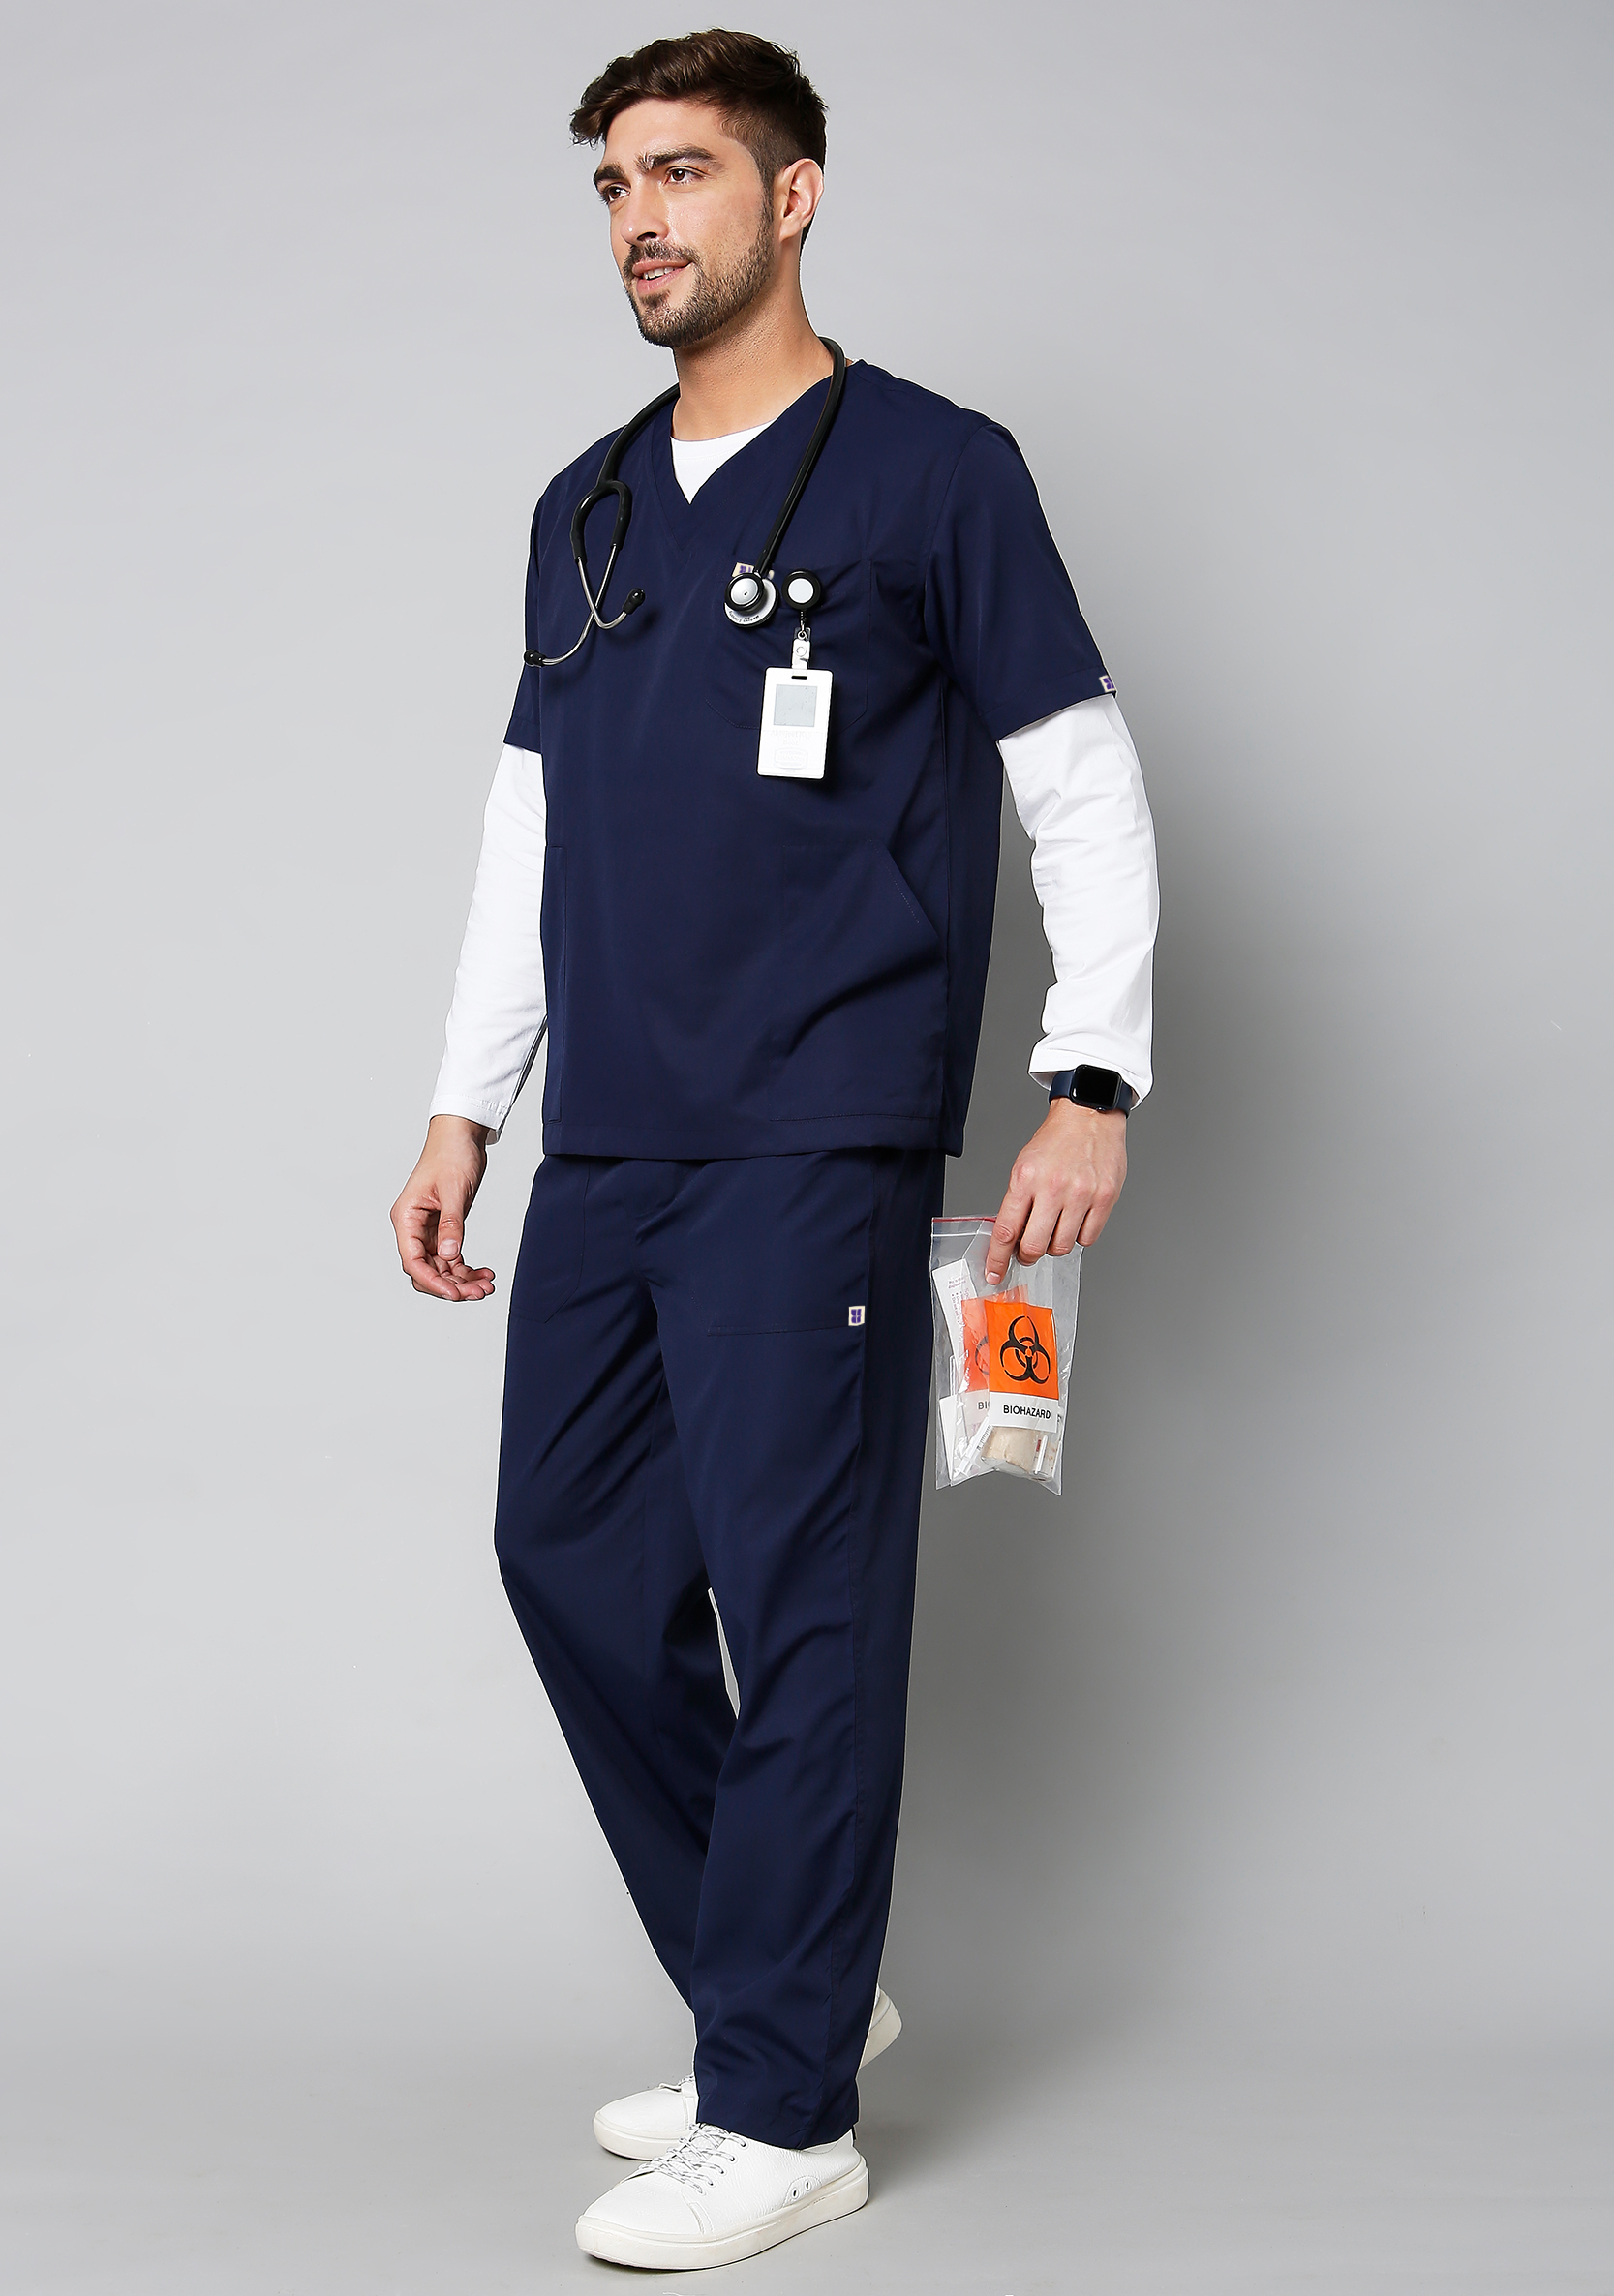 medical uniform nursing dress doctor scrub OT kit male uniform navy maroon  uniform